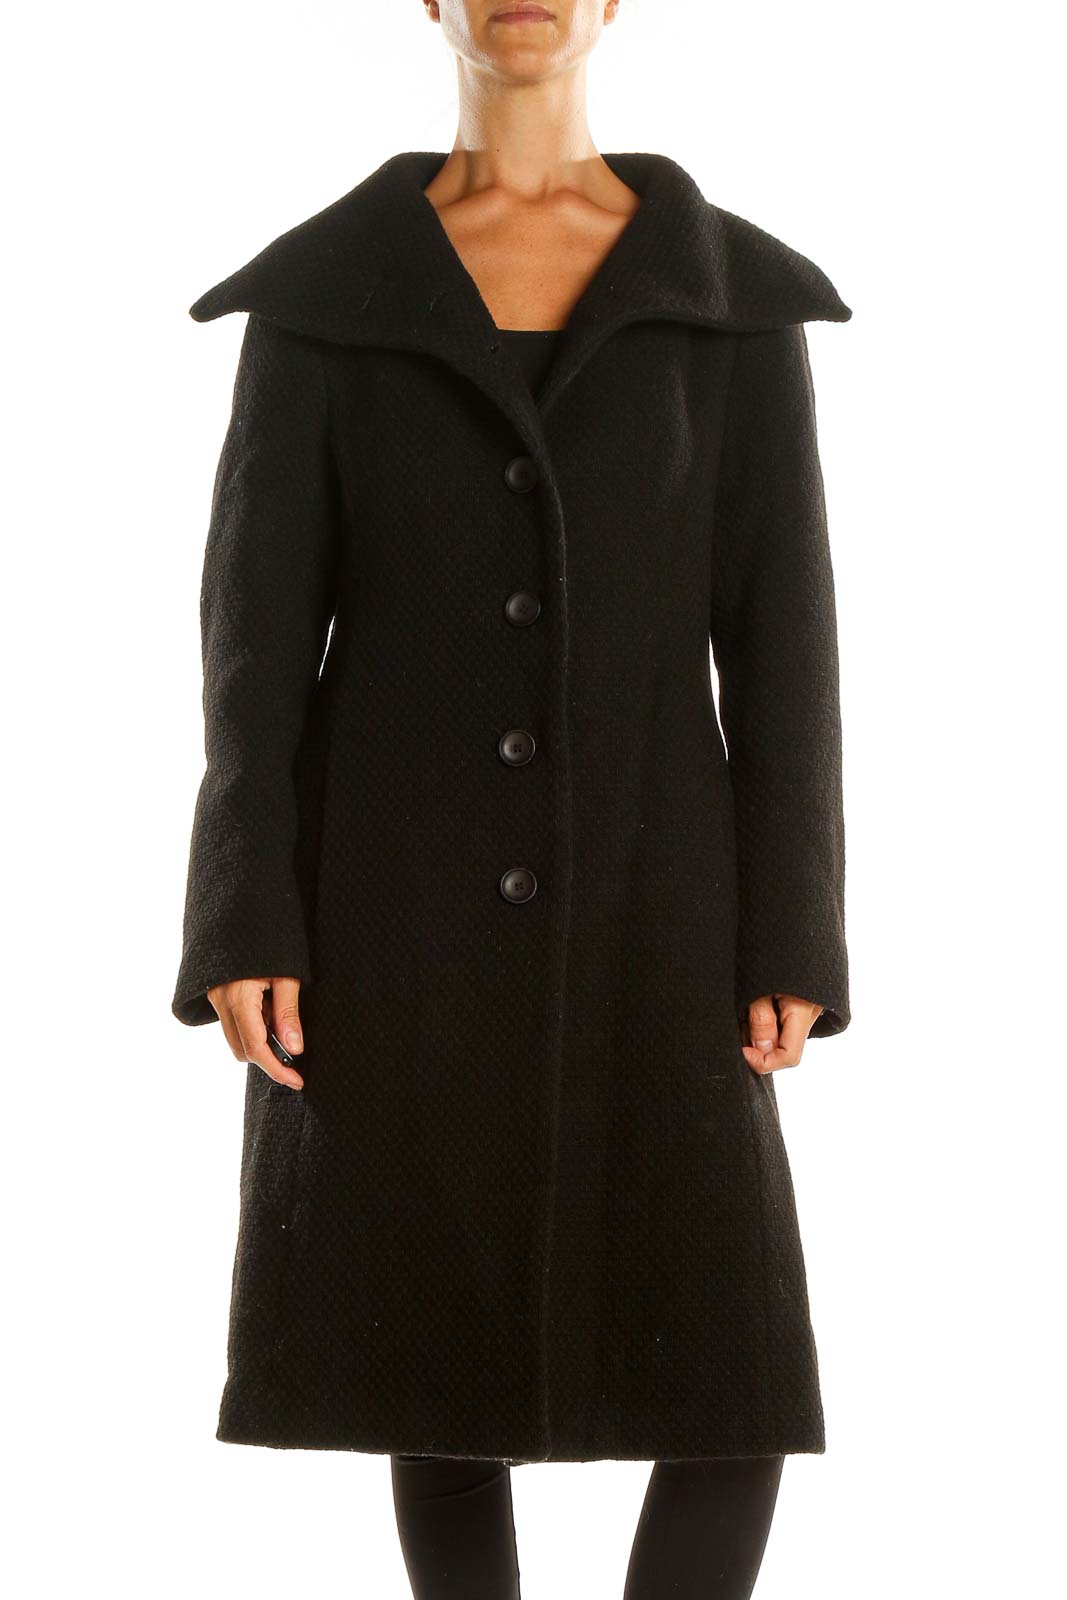 Black Coat Front